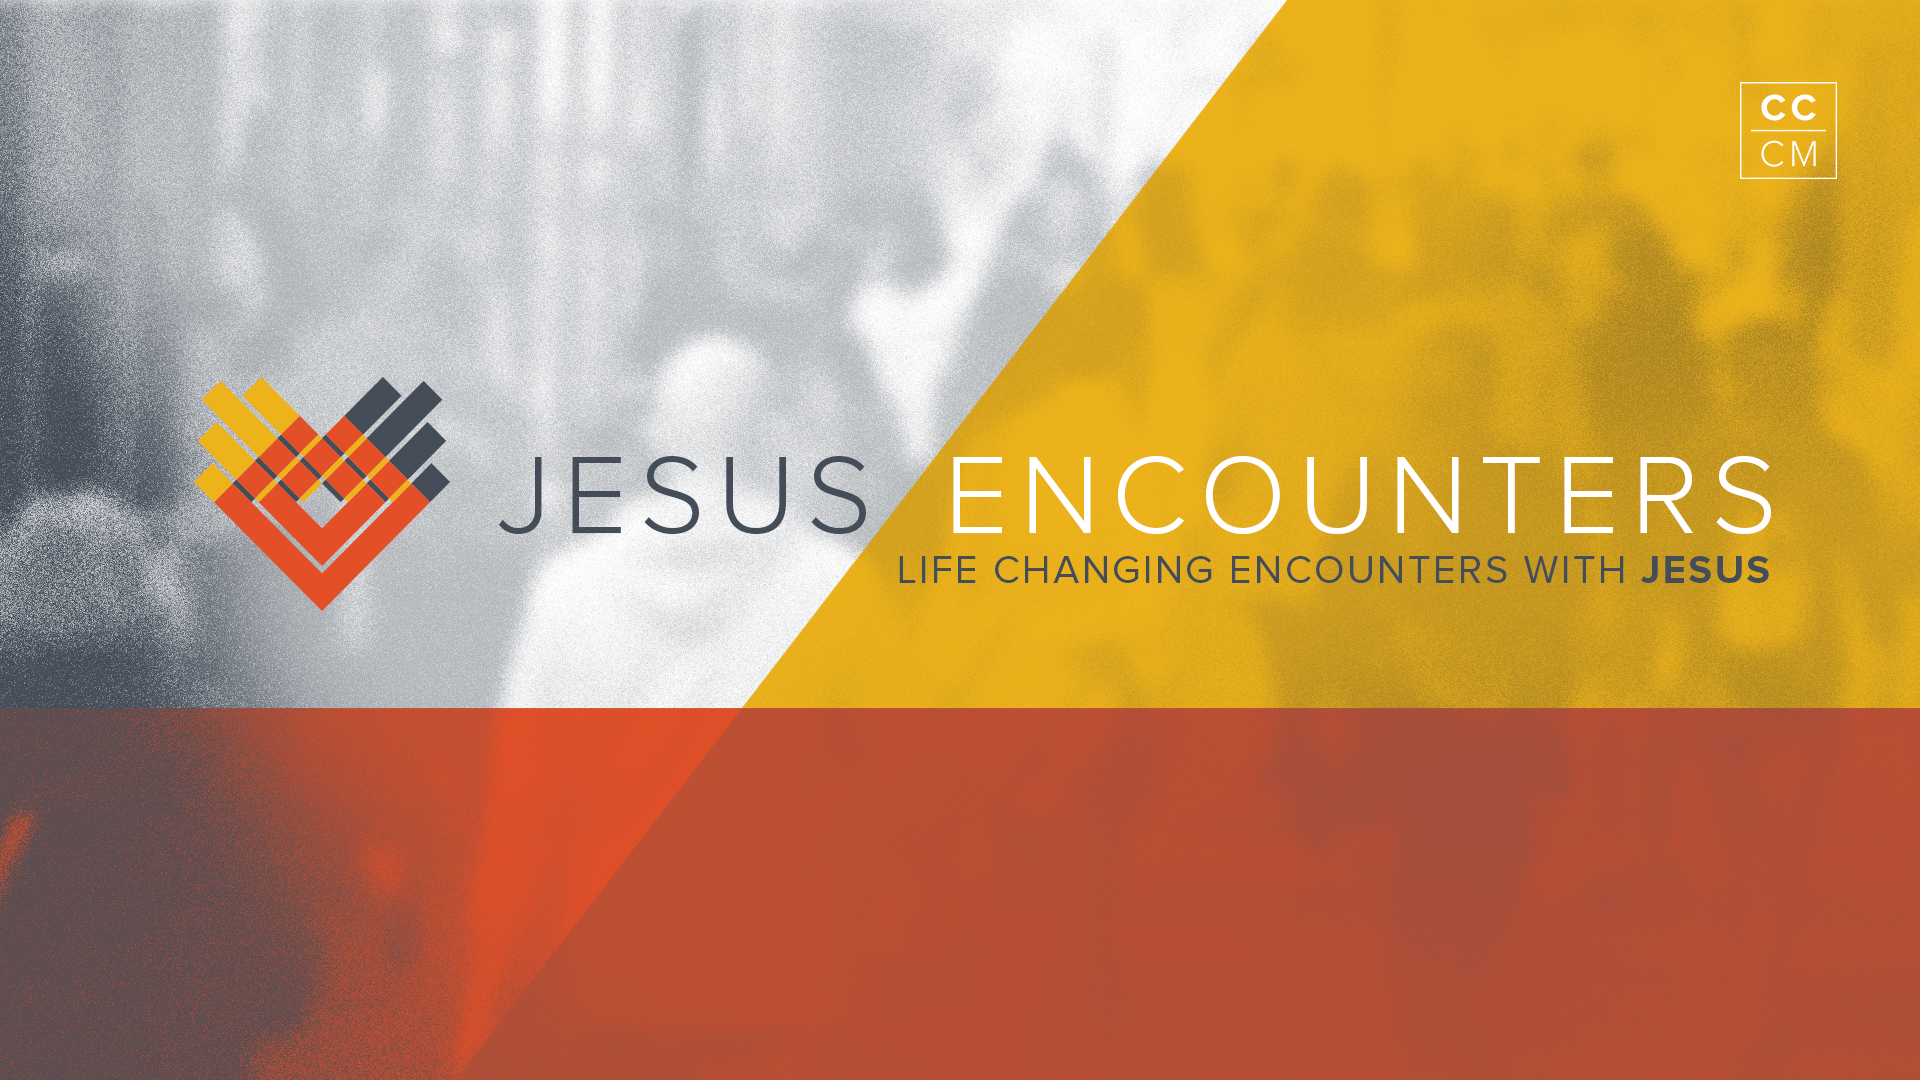 Jesus Encounters 1920x1080